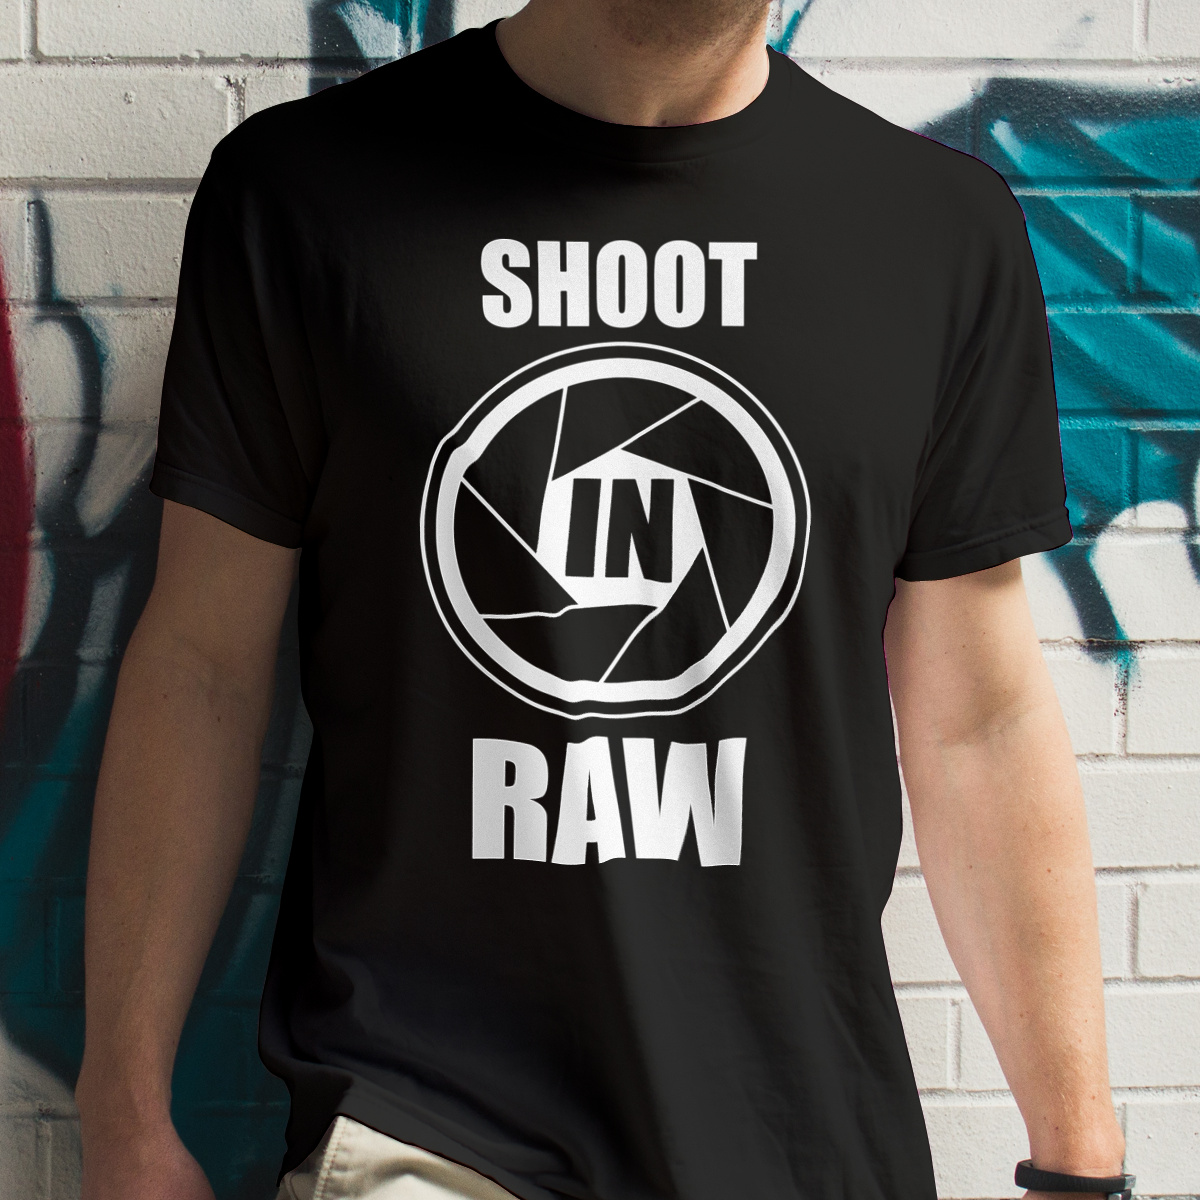 Shoot In RAW - Męska Koszulka Czarna